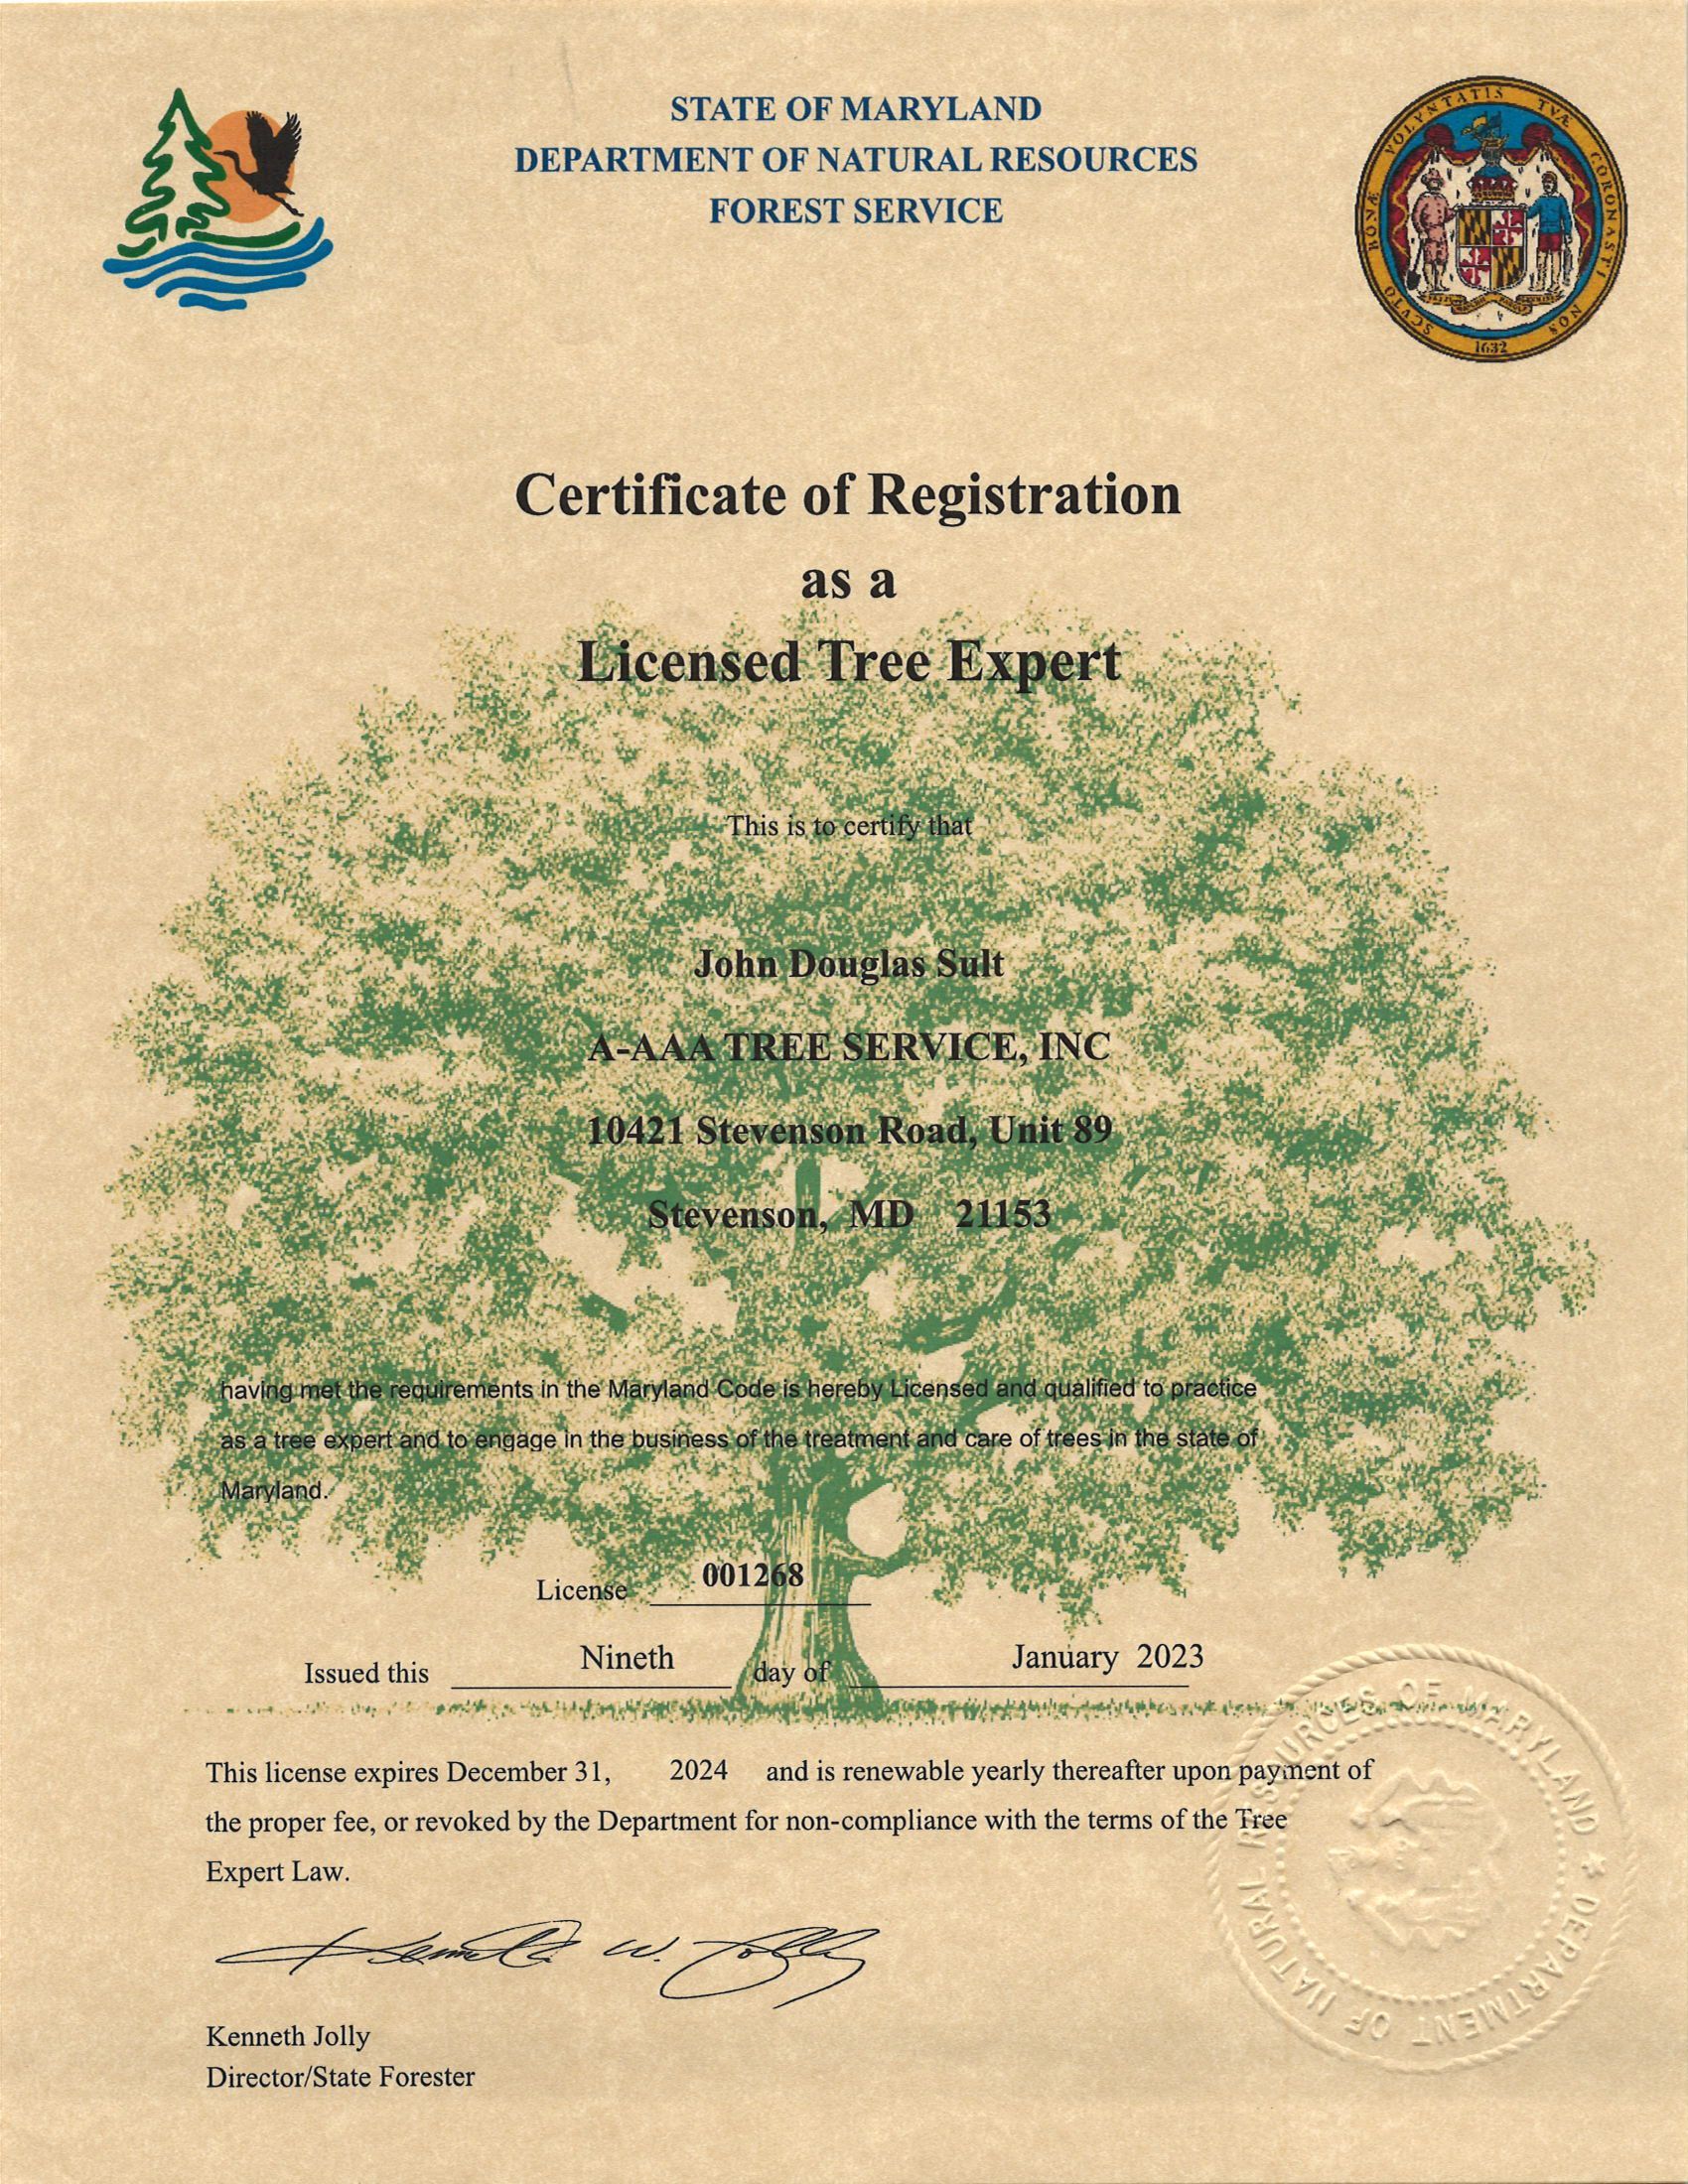 John Douglas Sult - Certificate of Registration